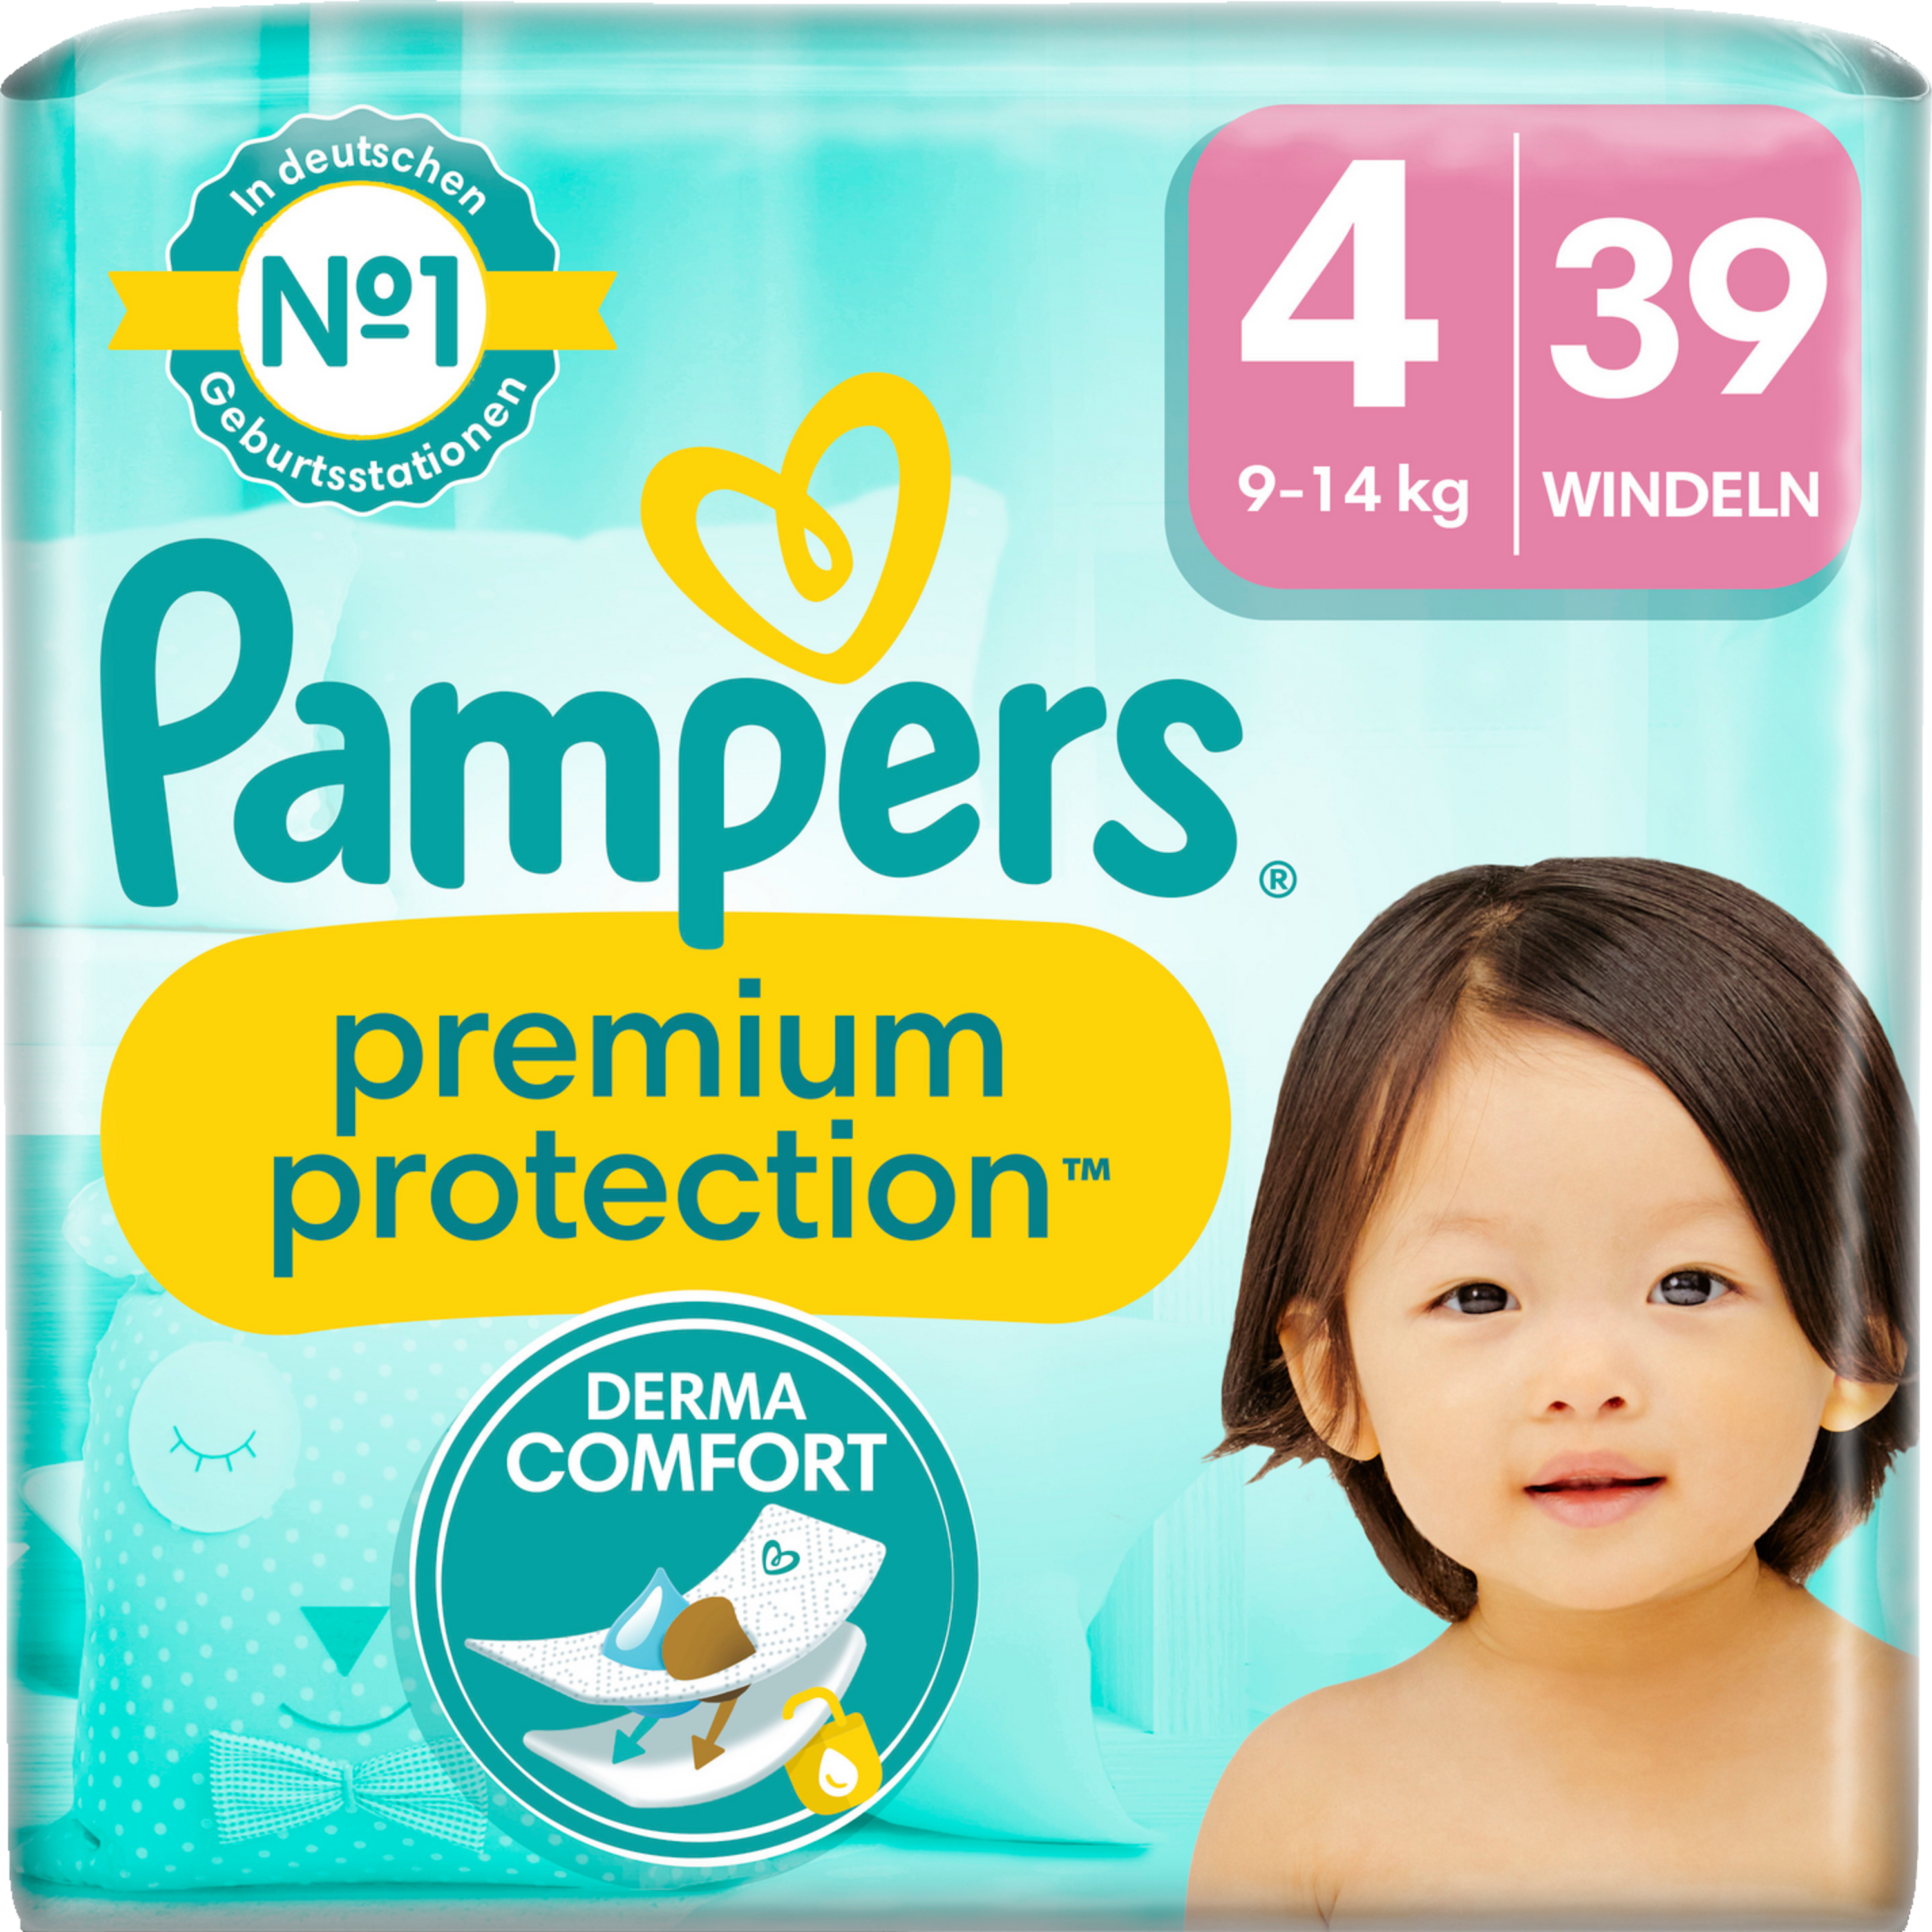 Pampers Couches bébé Taille 1 (2-5Kg) premium protection x42 